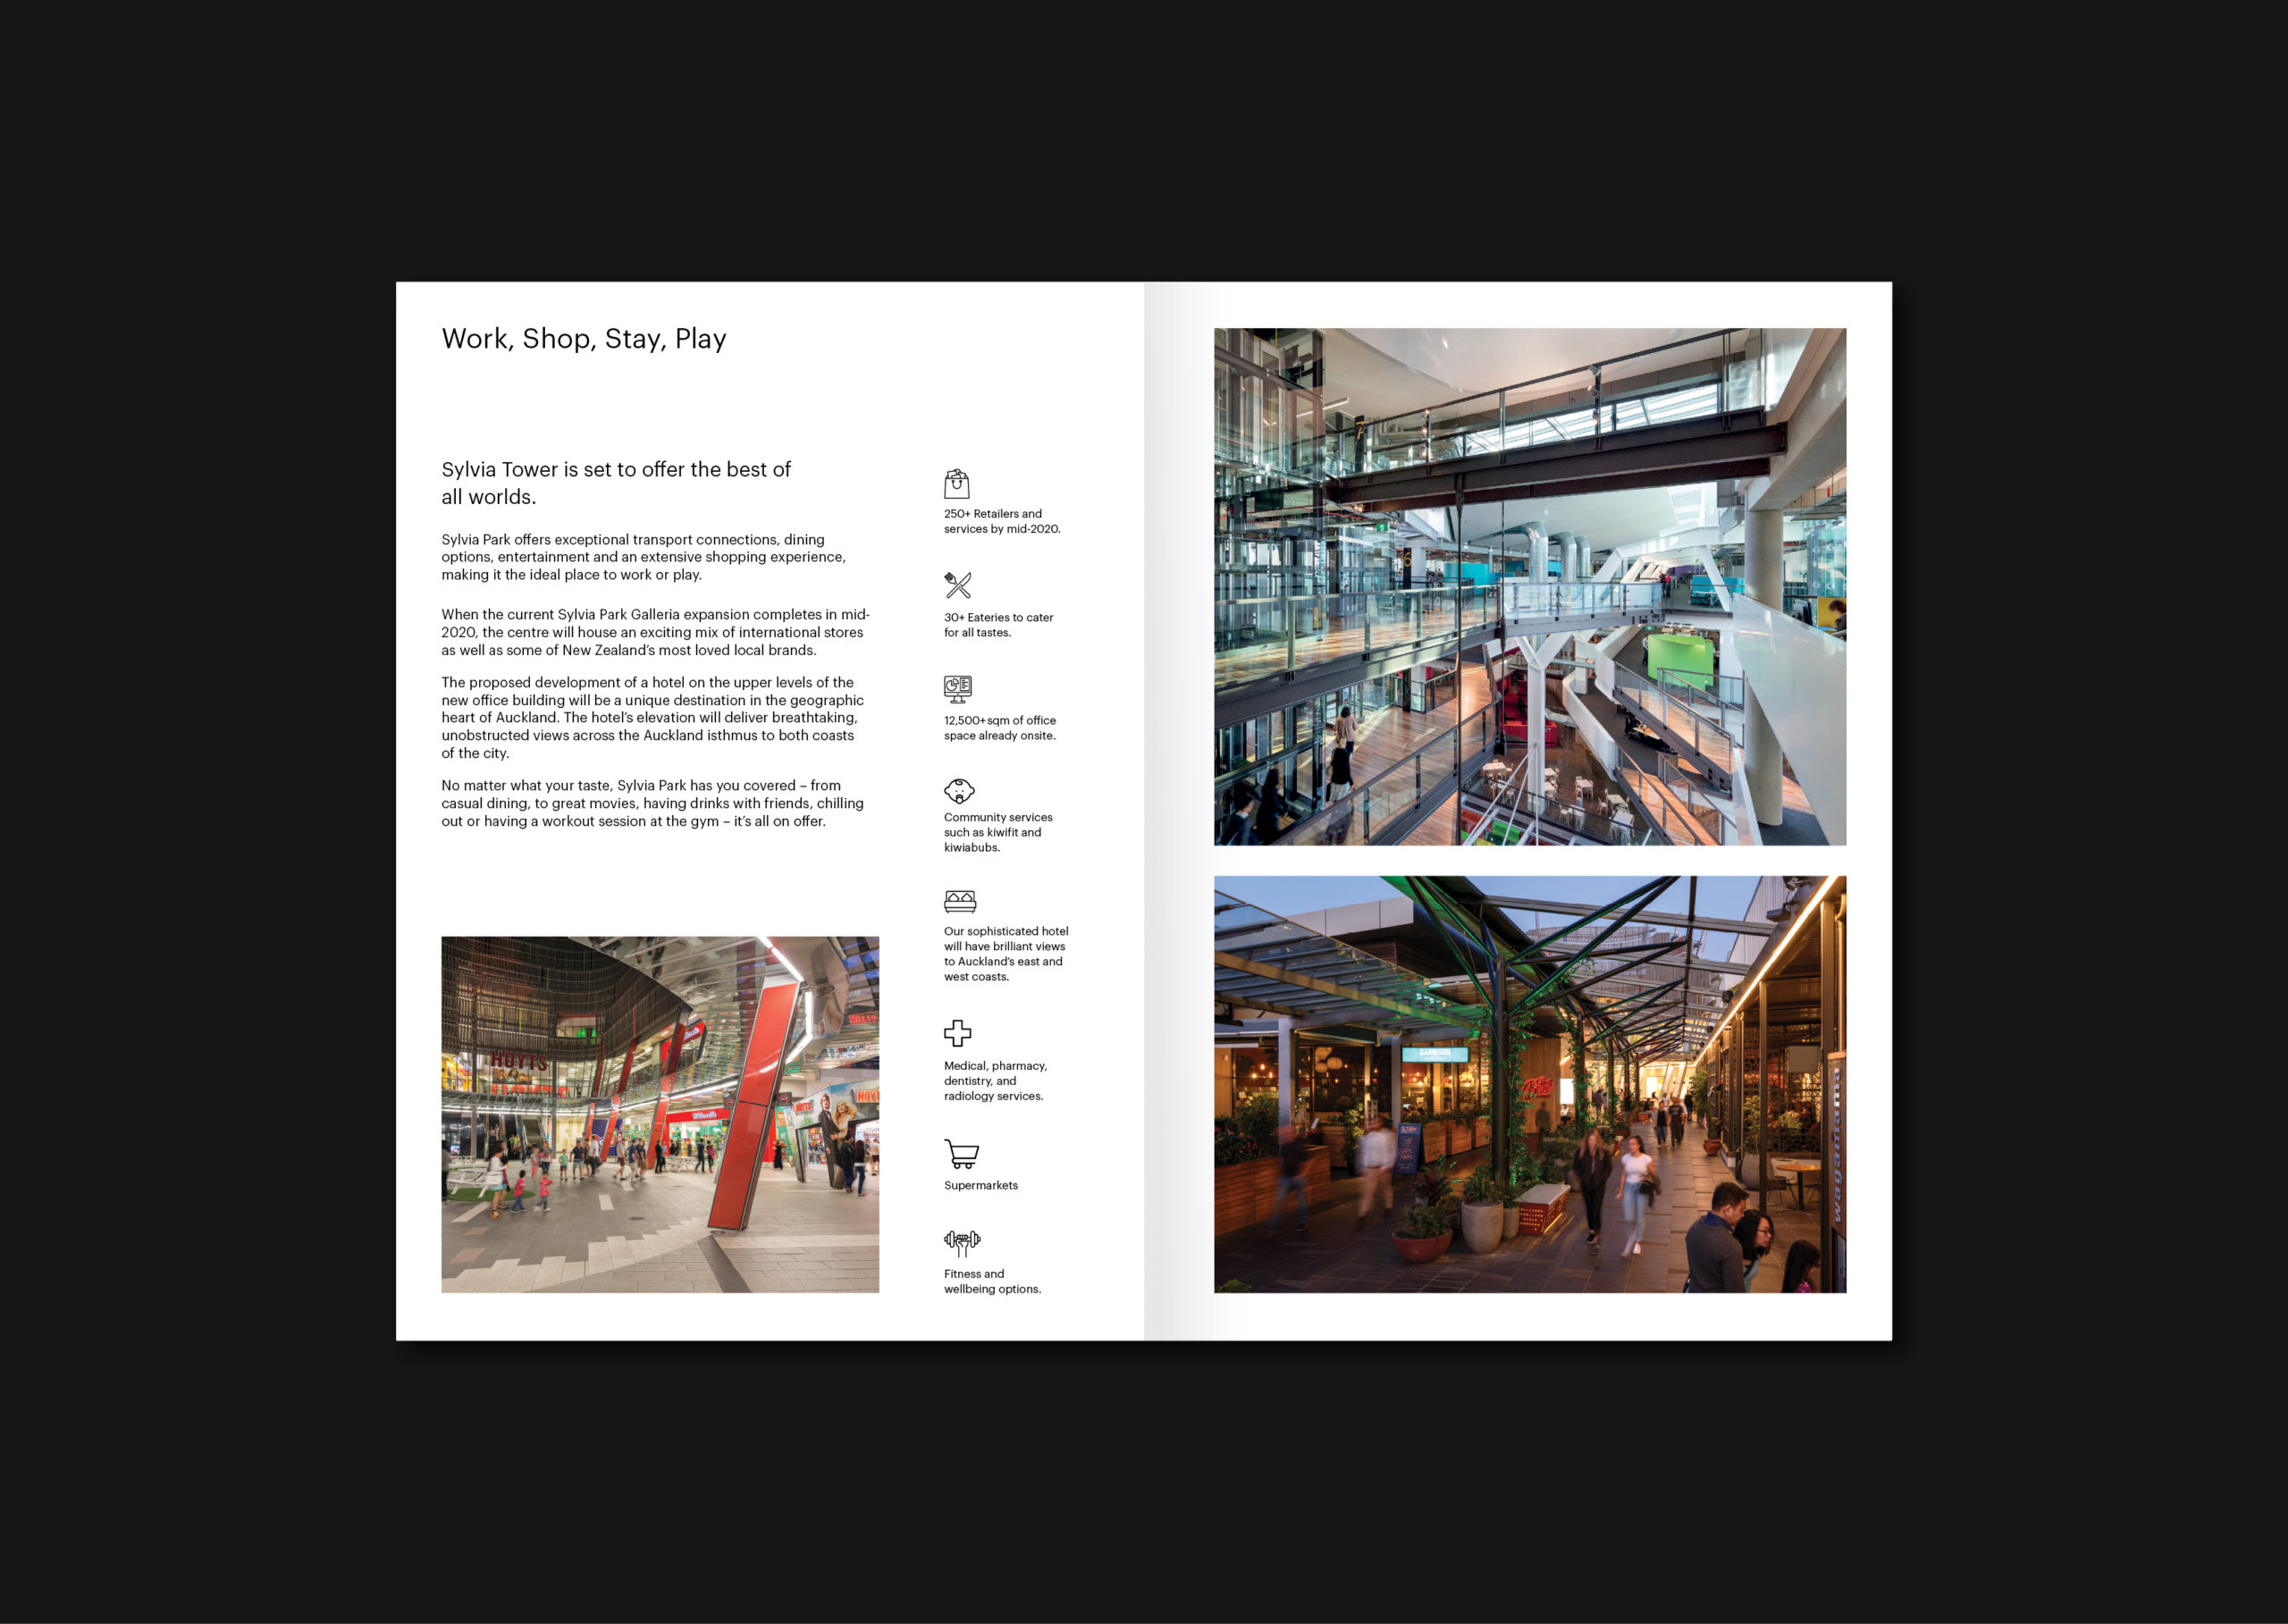 Kiwi Property – Sylvia Tower branding their new commercial development, Brochure